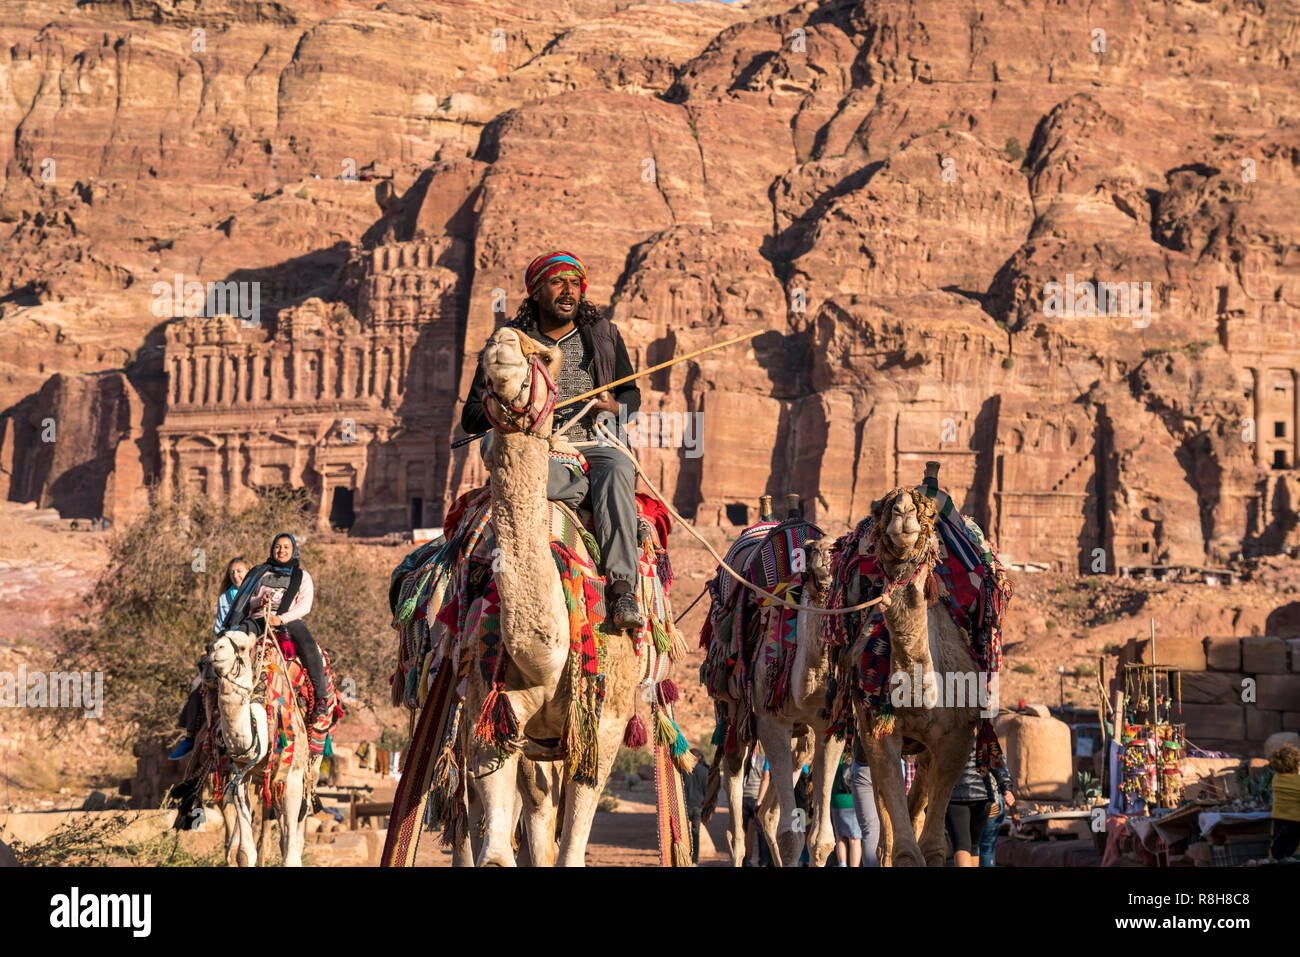 Kamele in der historischen Ruinenstätte Petra, Jordanien, Asien | Camels at the ancient city of Petra, Jordan, Asia Stock Photo